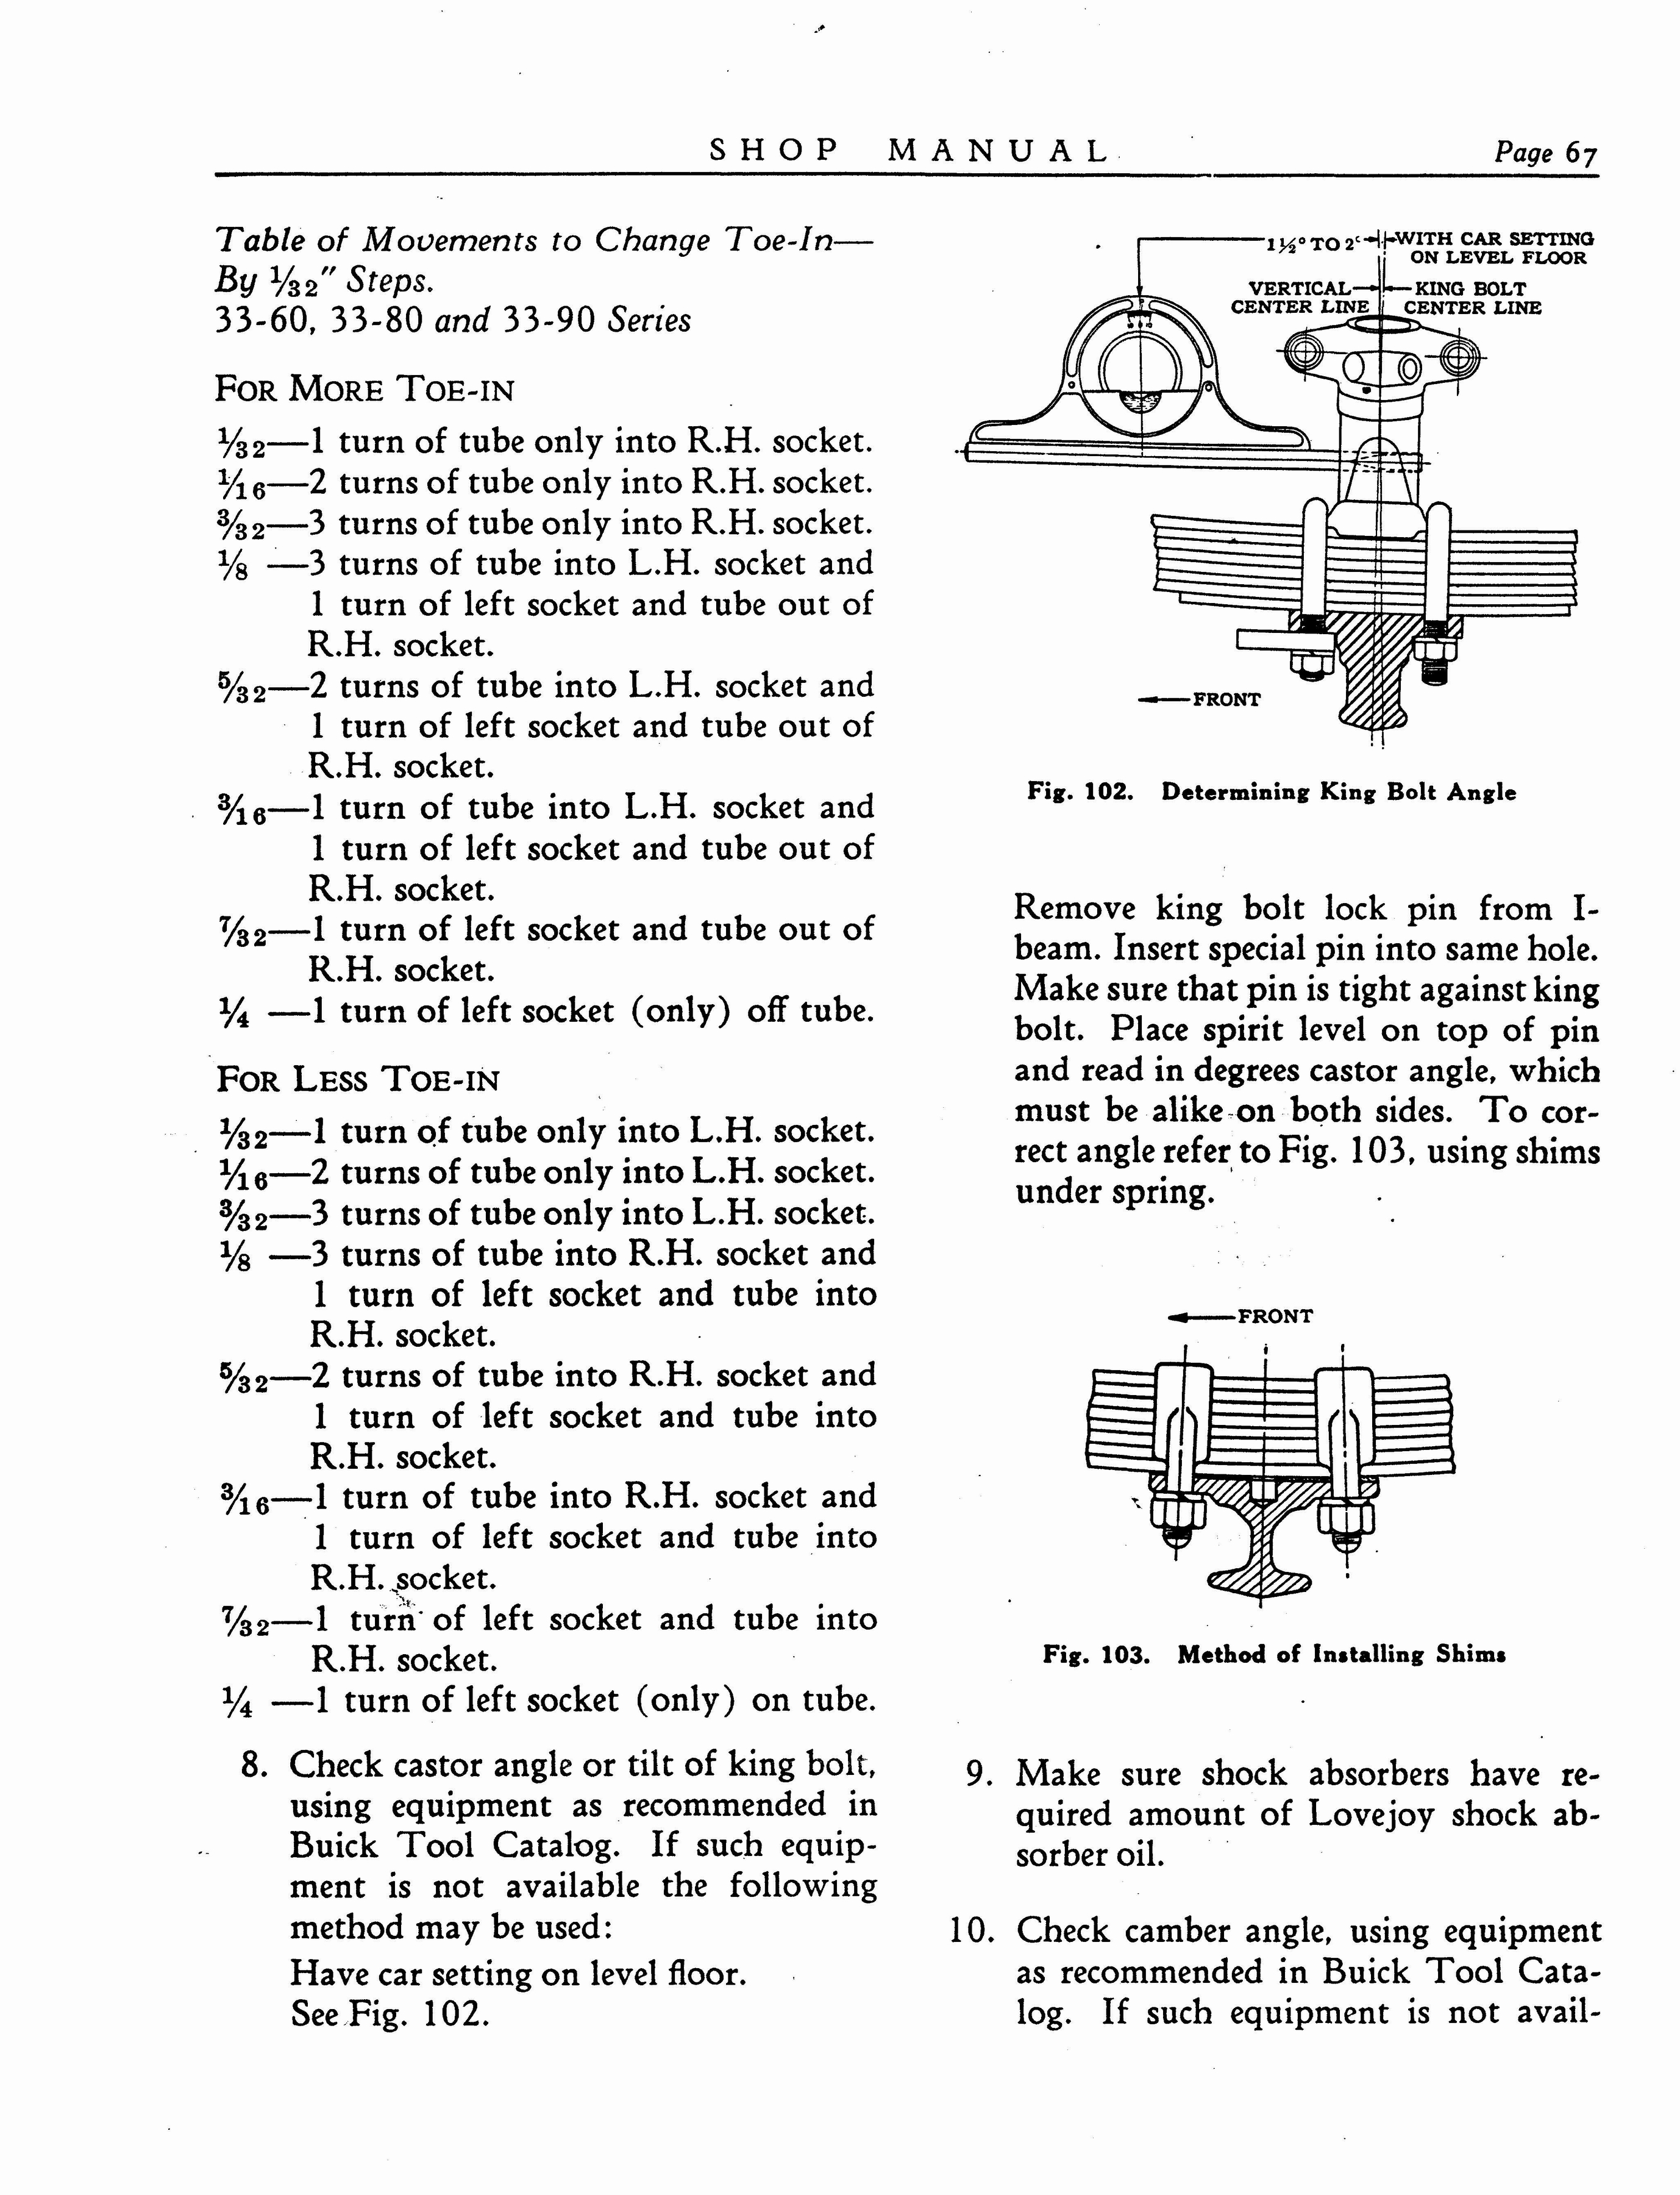 n_1933 Buick Shop Manual_Page_068.jpg